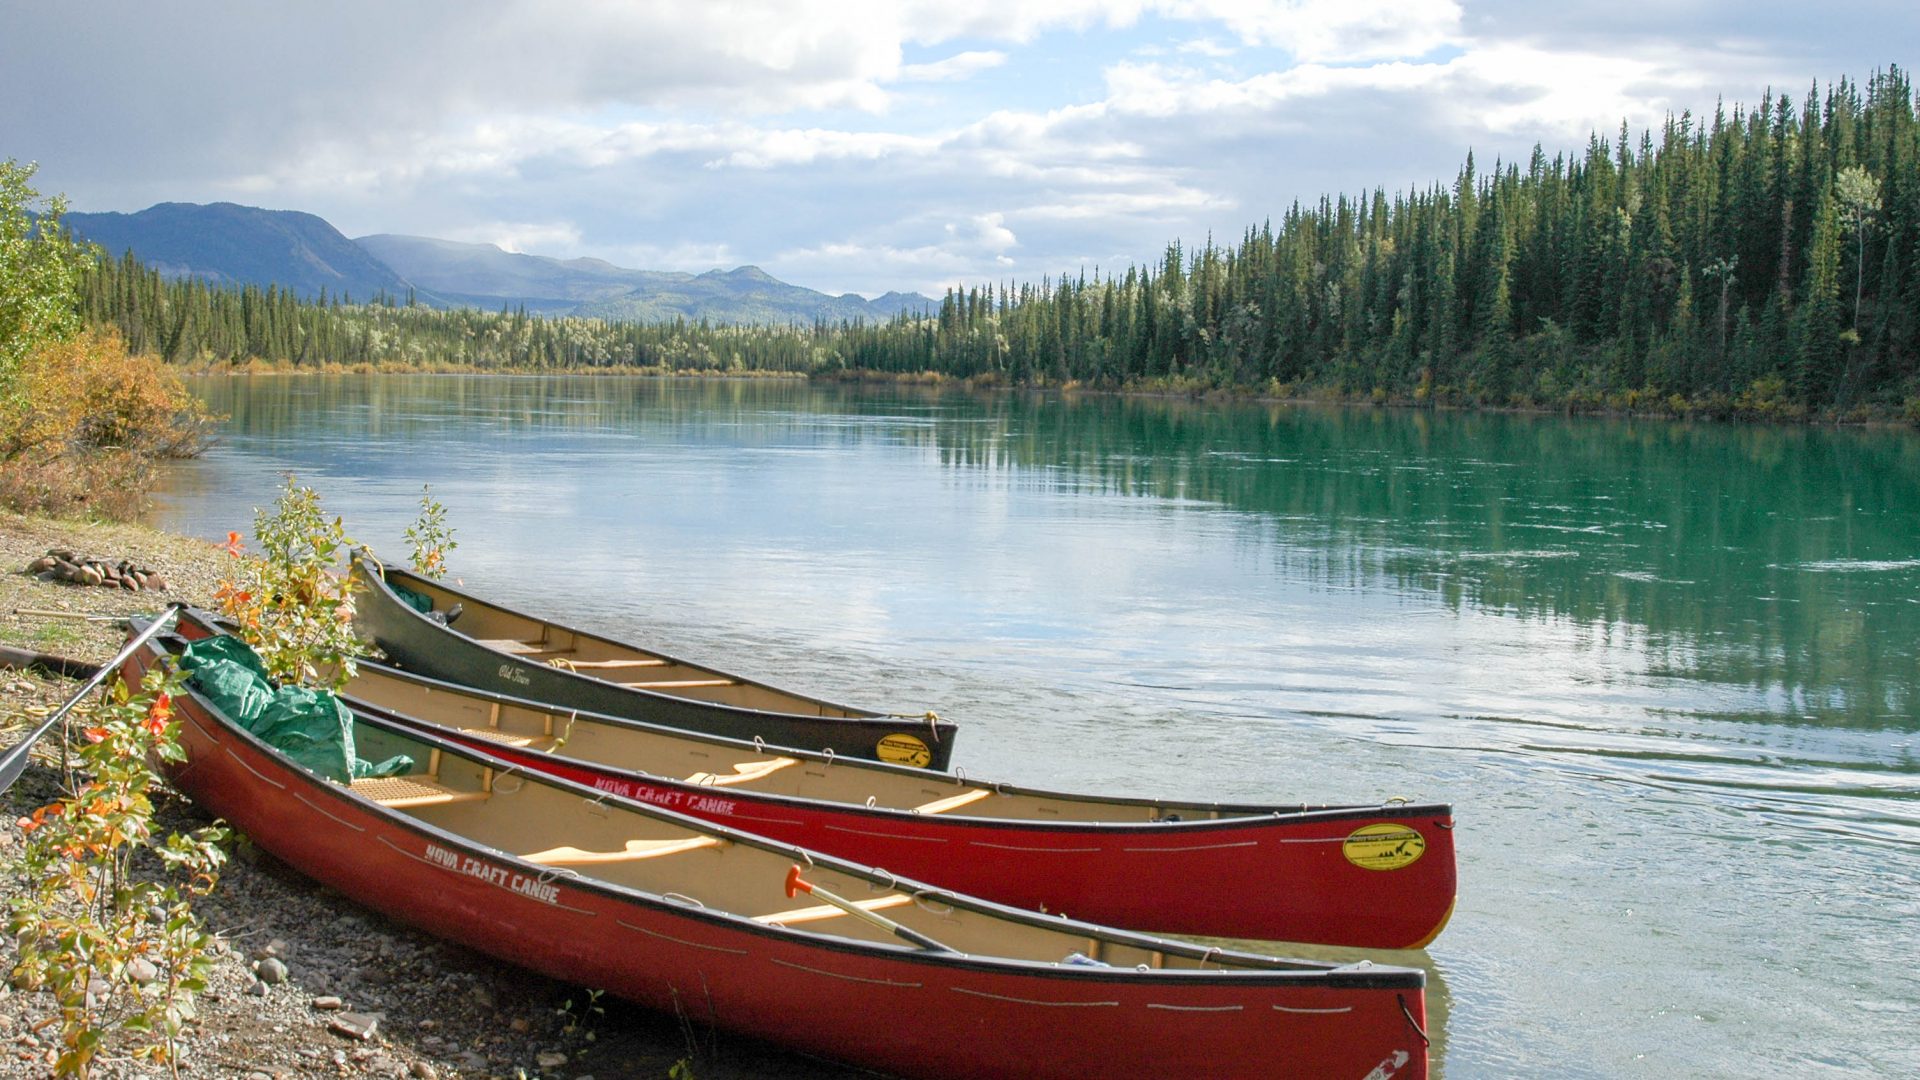 Yukon River Tour - Lake Laberge to Carmacks - Canoe next to the Yukon River